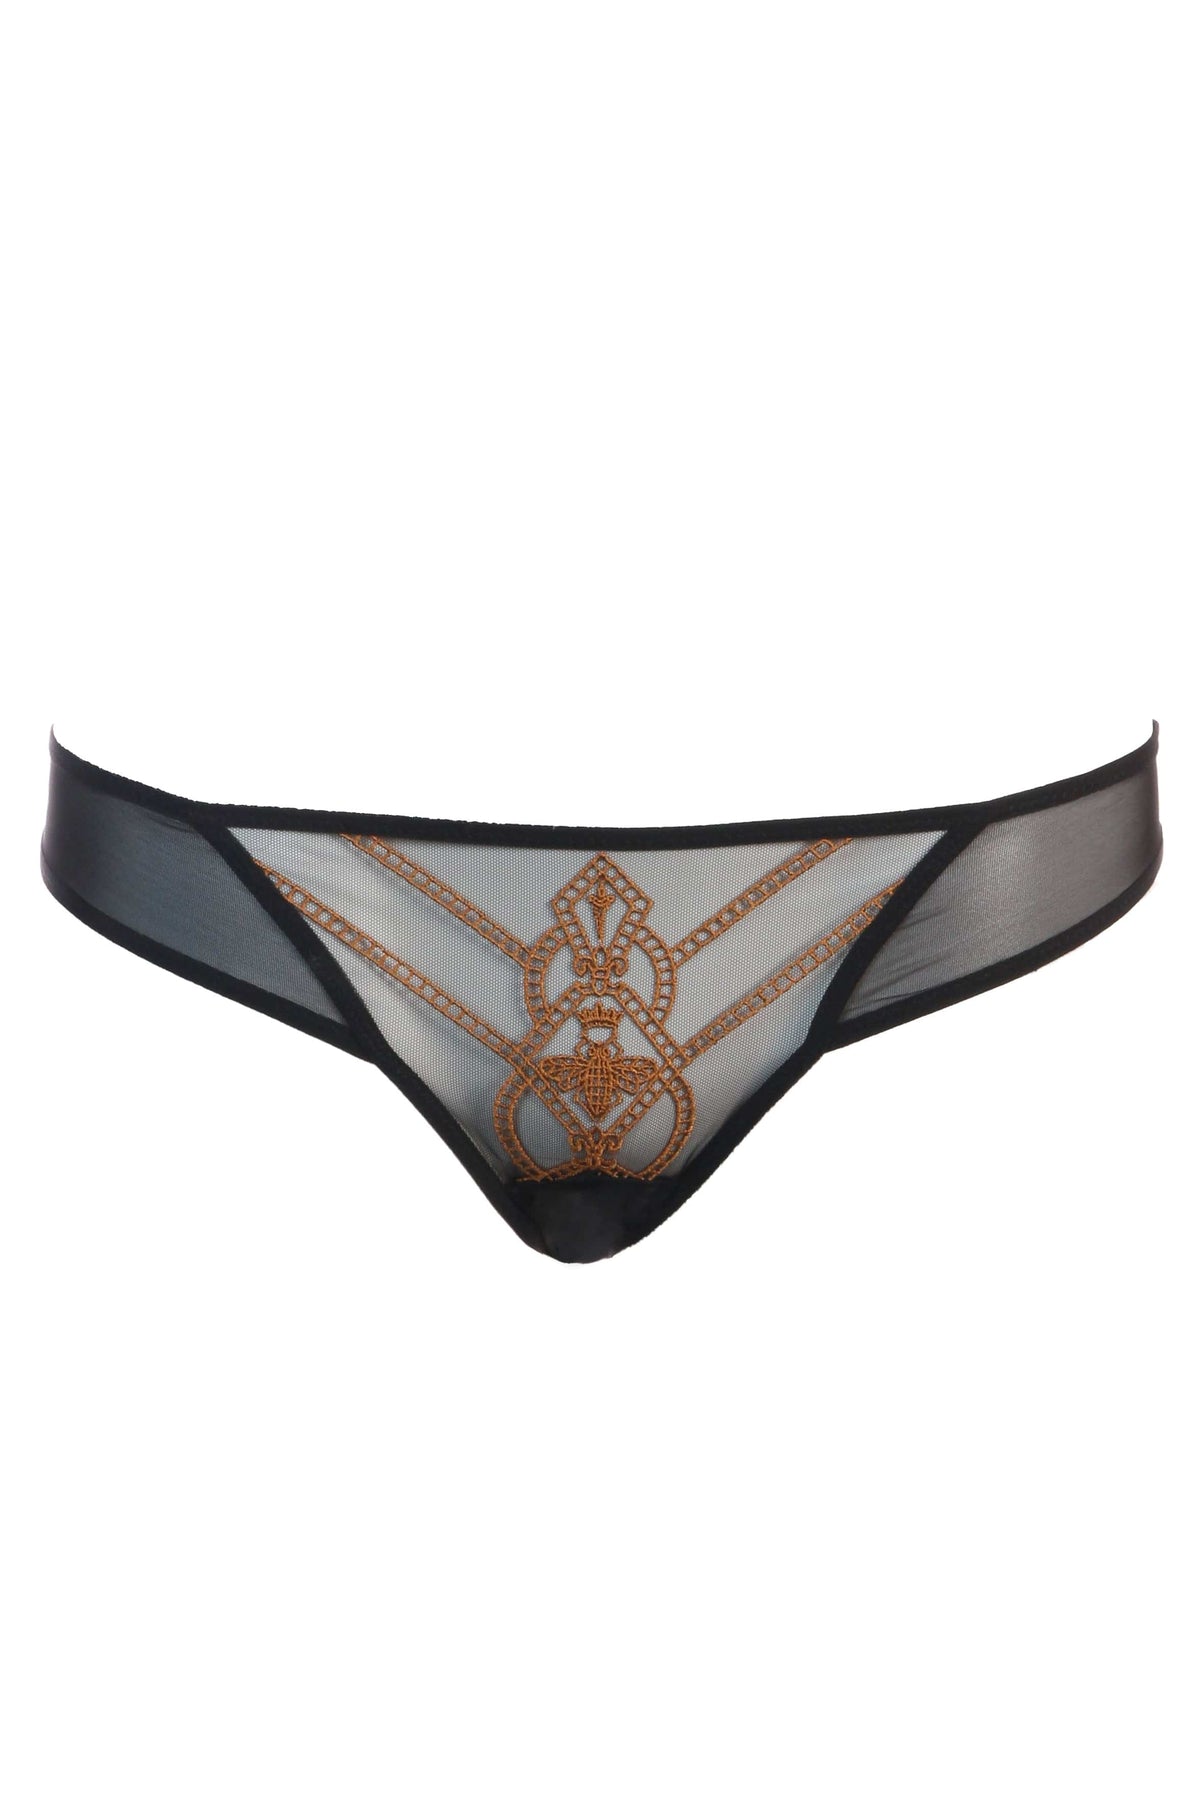 Thistle &amp; Spire Underwear Abielle Tanga- Black